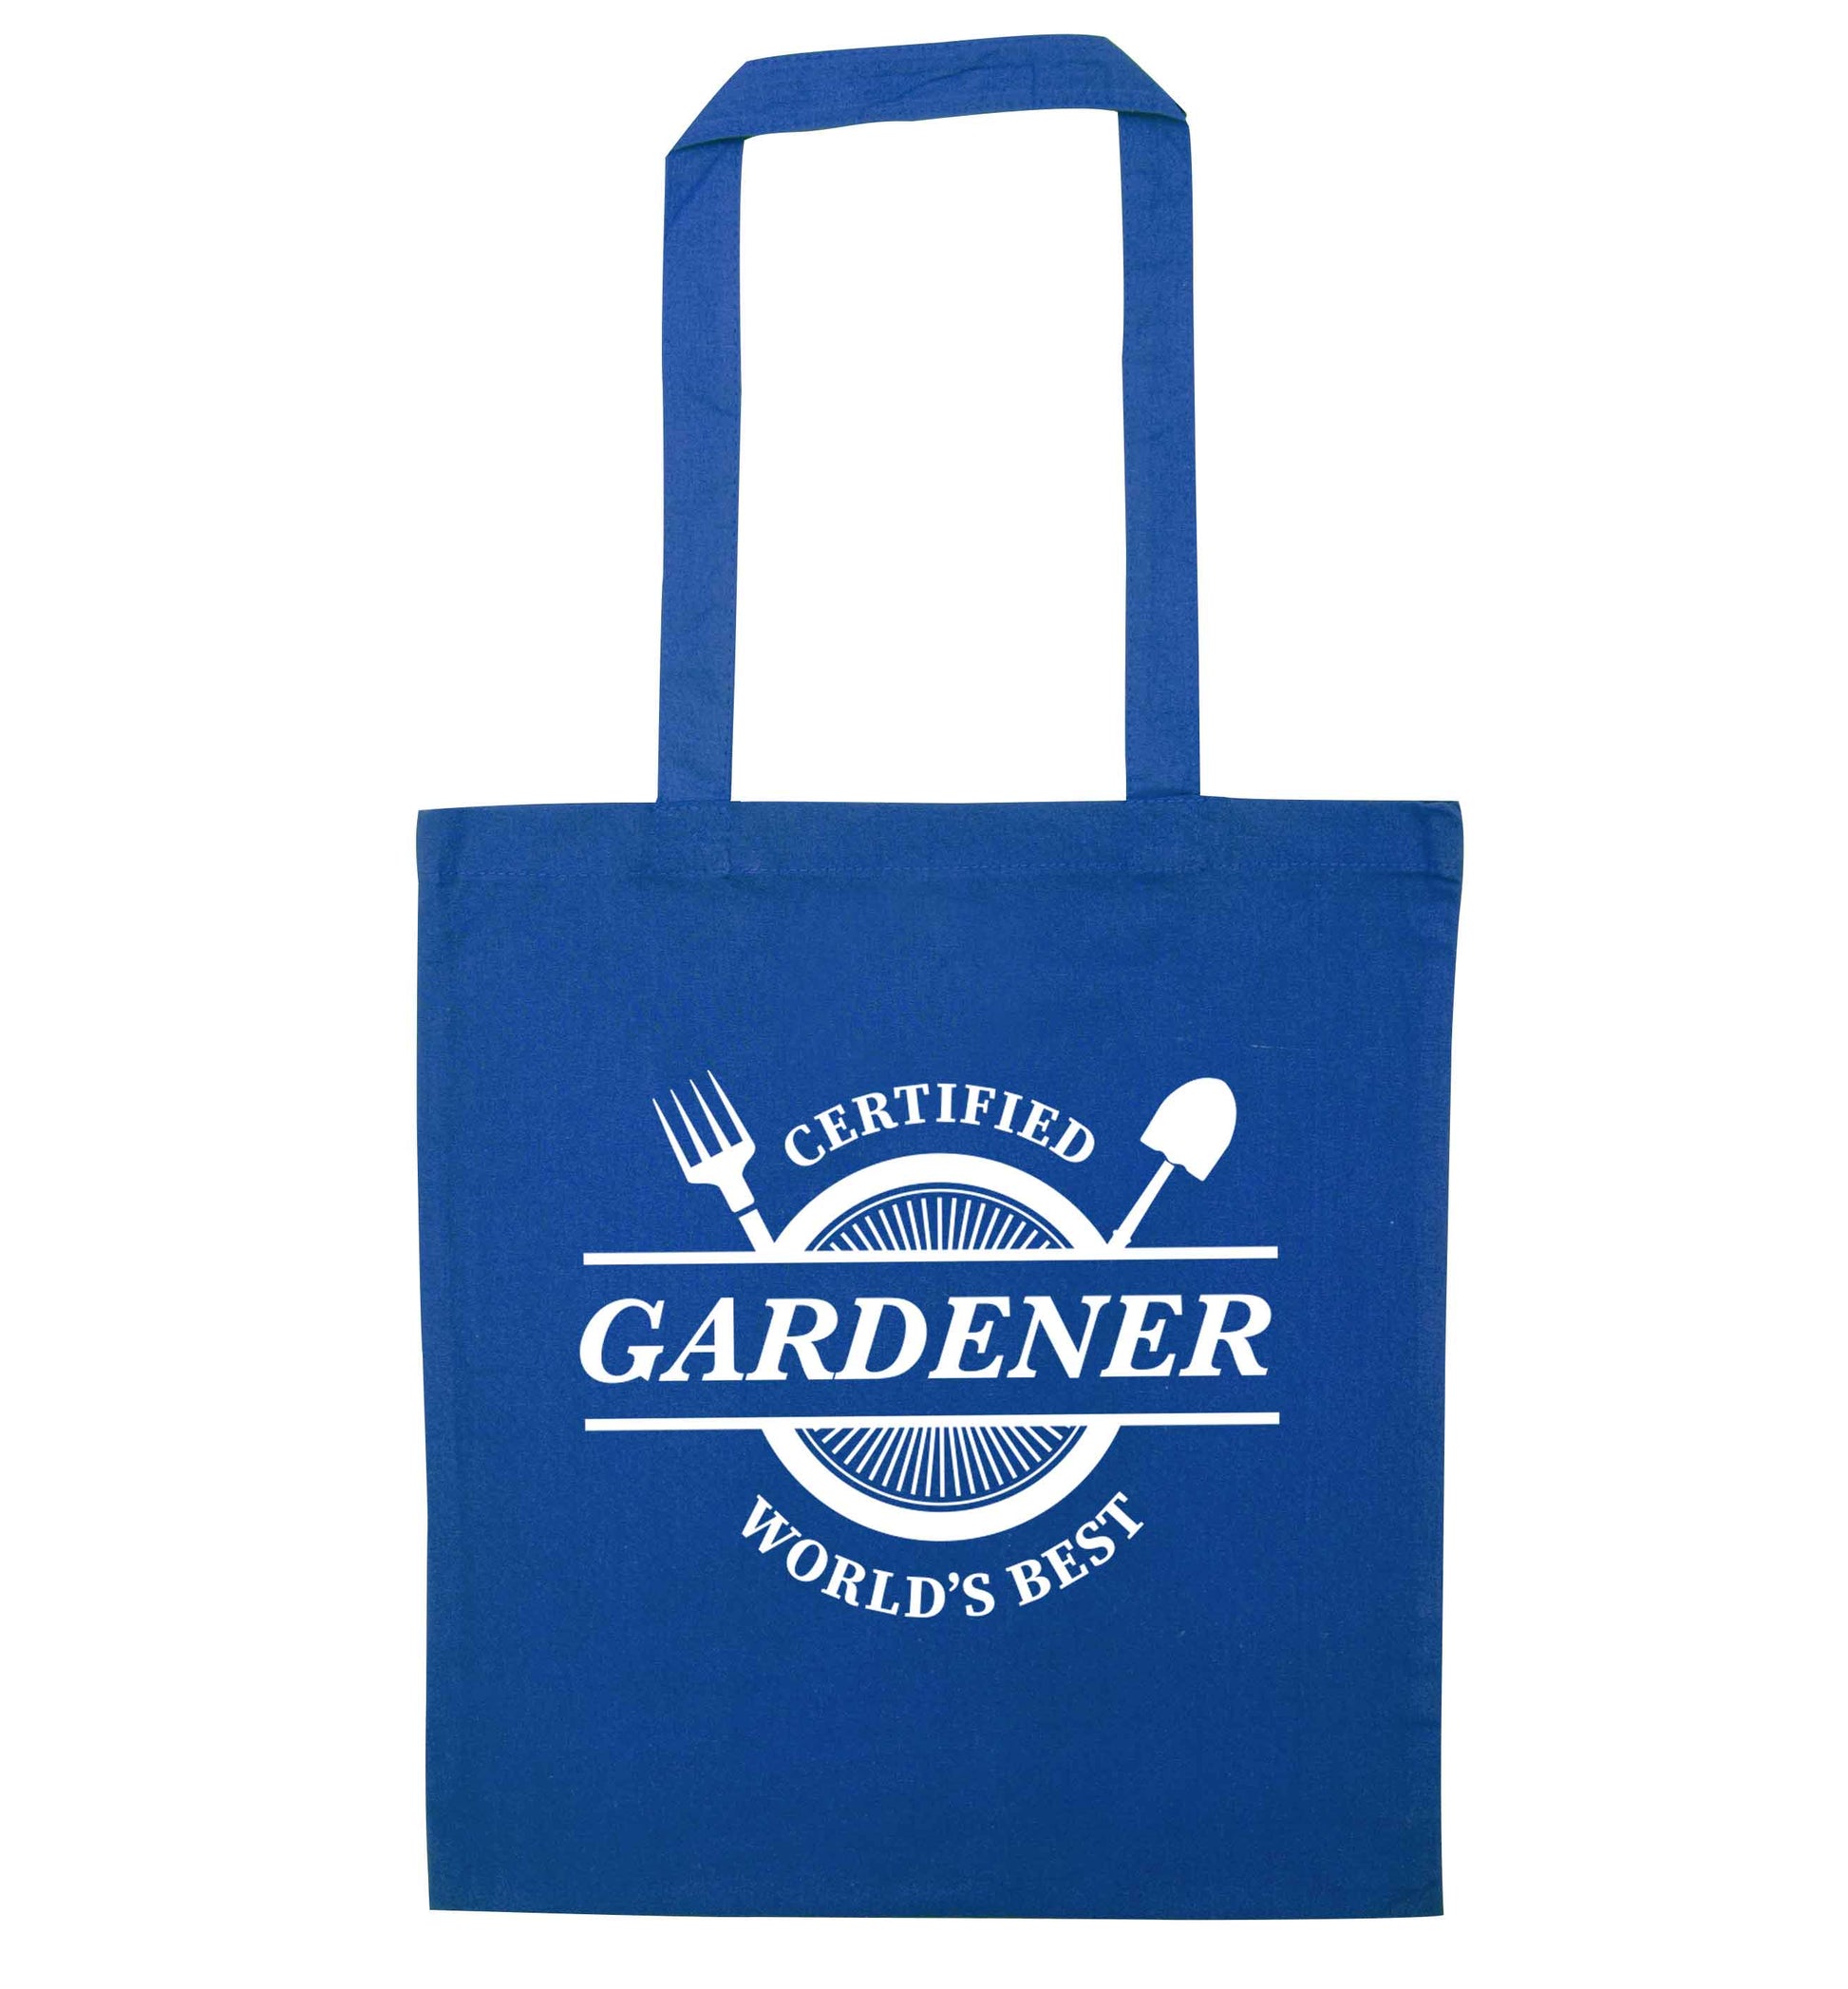 Certified gardener worlds best blue tote bag